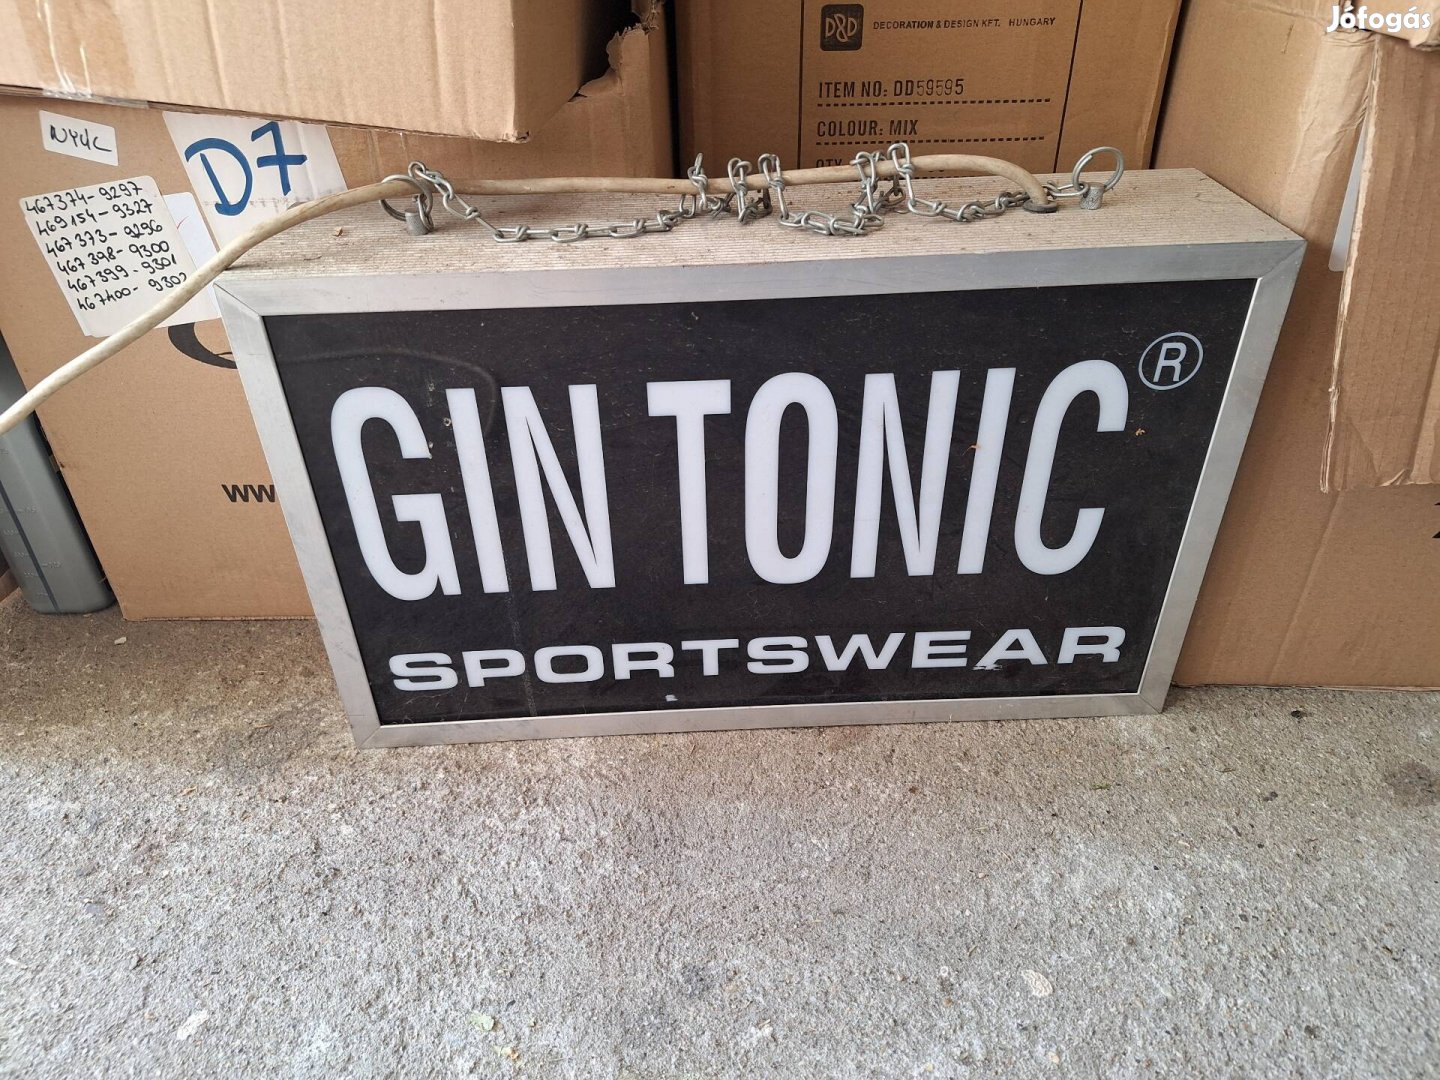 Gin tonic sportswear ruházati tábla cégér 